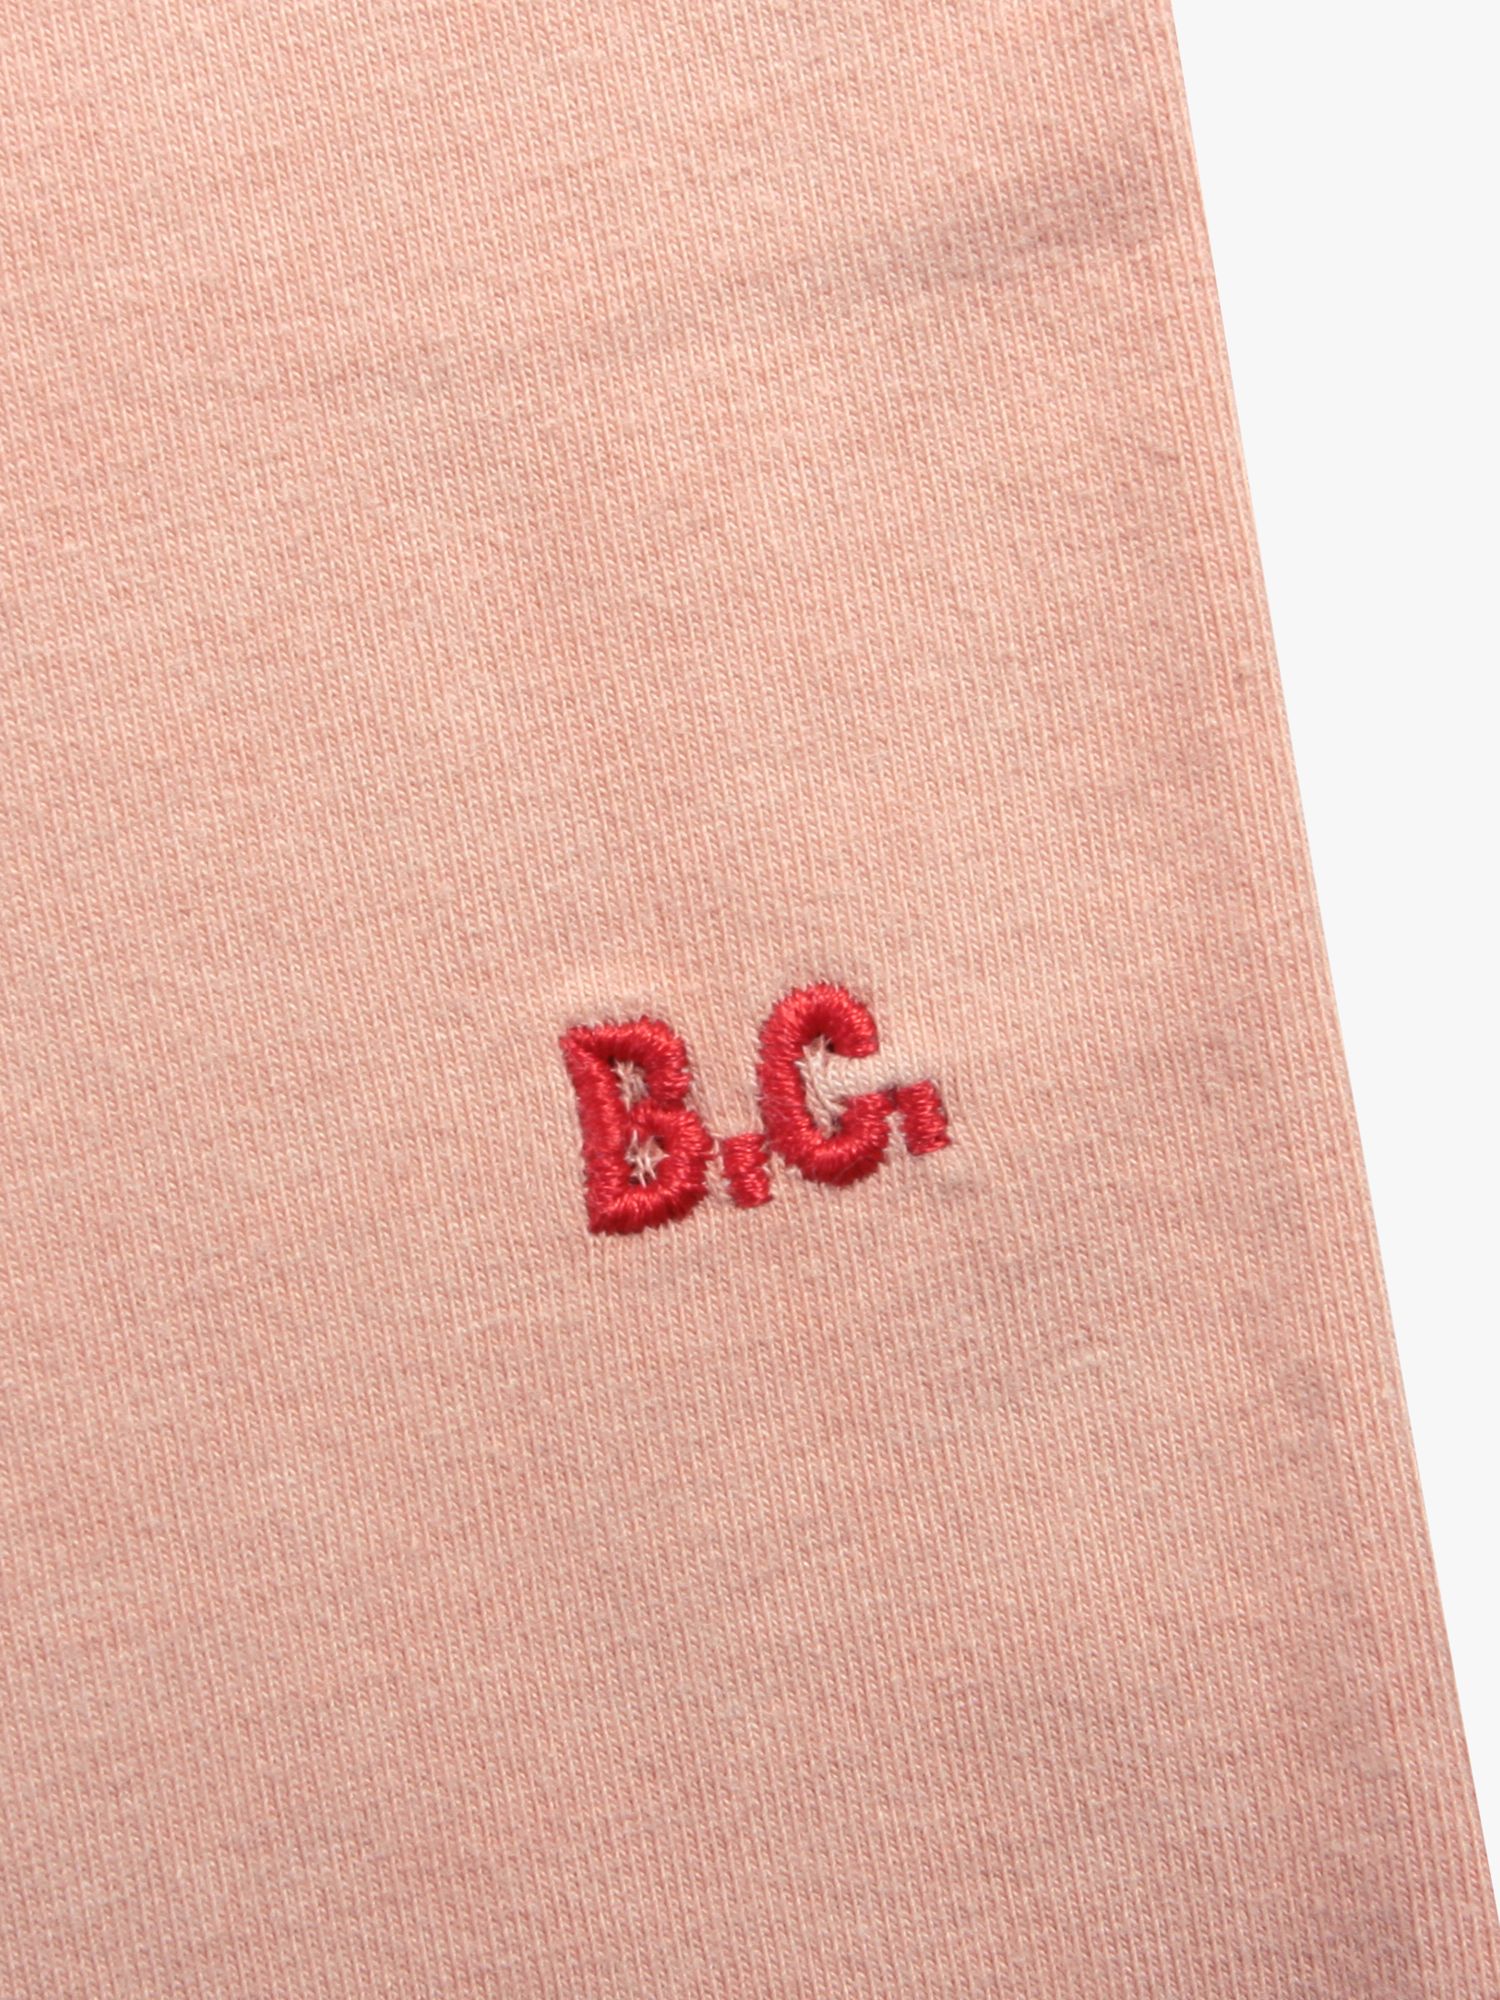 Buy Bobo Choses Kids' Organic Cotton Blend Poma Apple Print Leggings Online at johnlewis.com